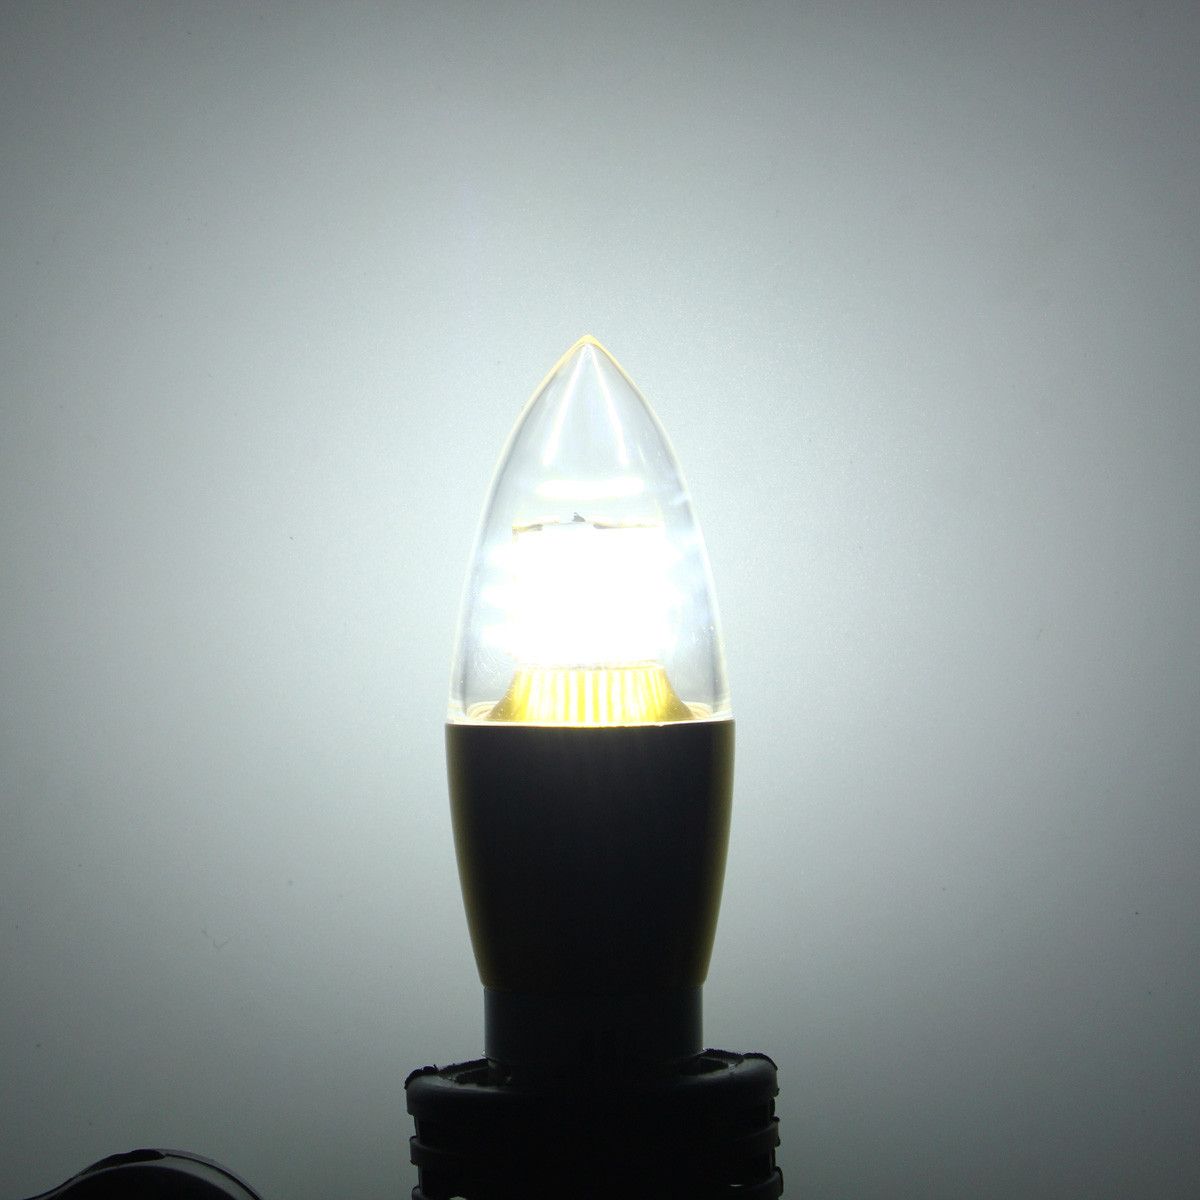 Dimmable-E27-E14-E12-7W-60-SMD-3014-LED-Pure-White-Warm-White-Candle-Light-Lamp-Bulb-AC110V-1082667